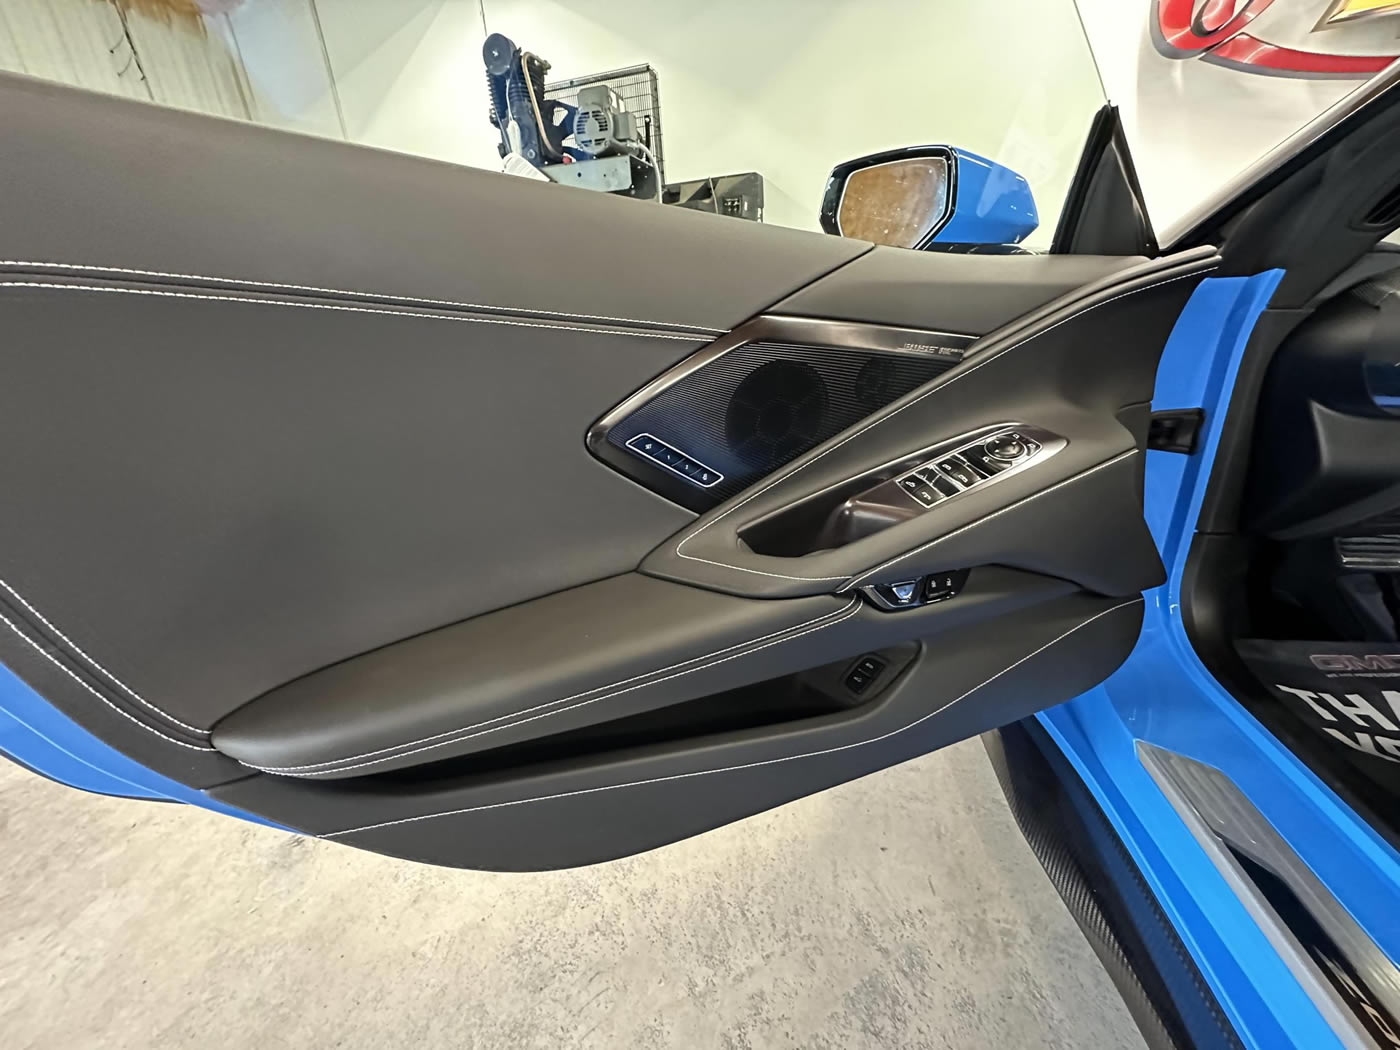 2023 Corvette Z06 Convertible 2LZ Z07 in Rapid Blue